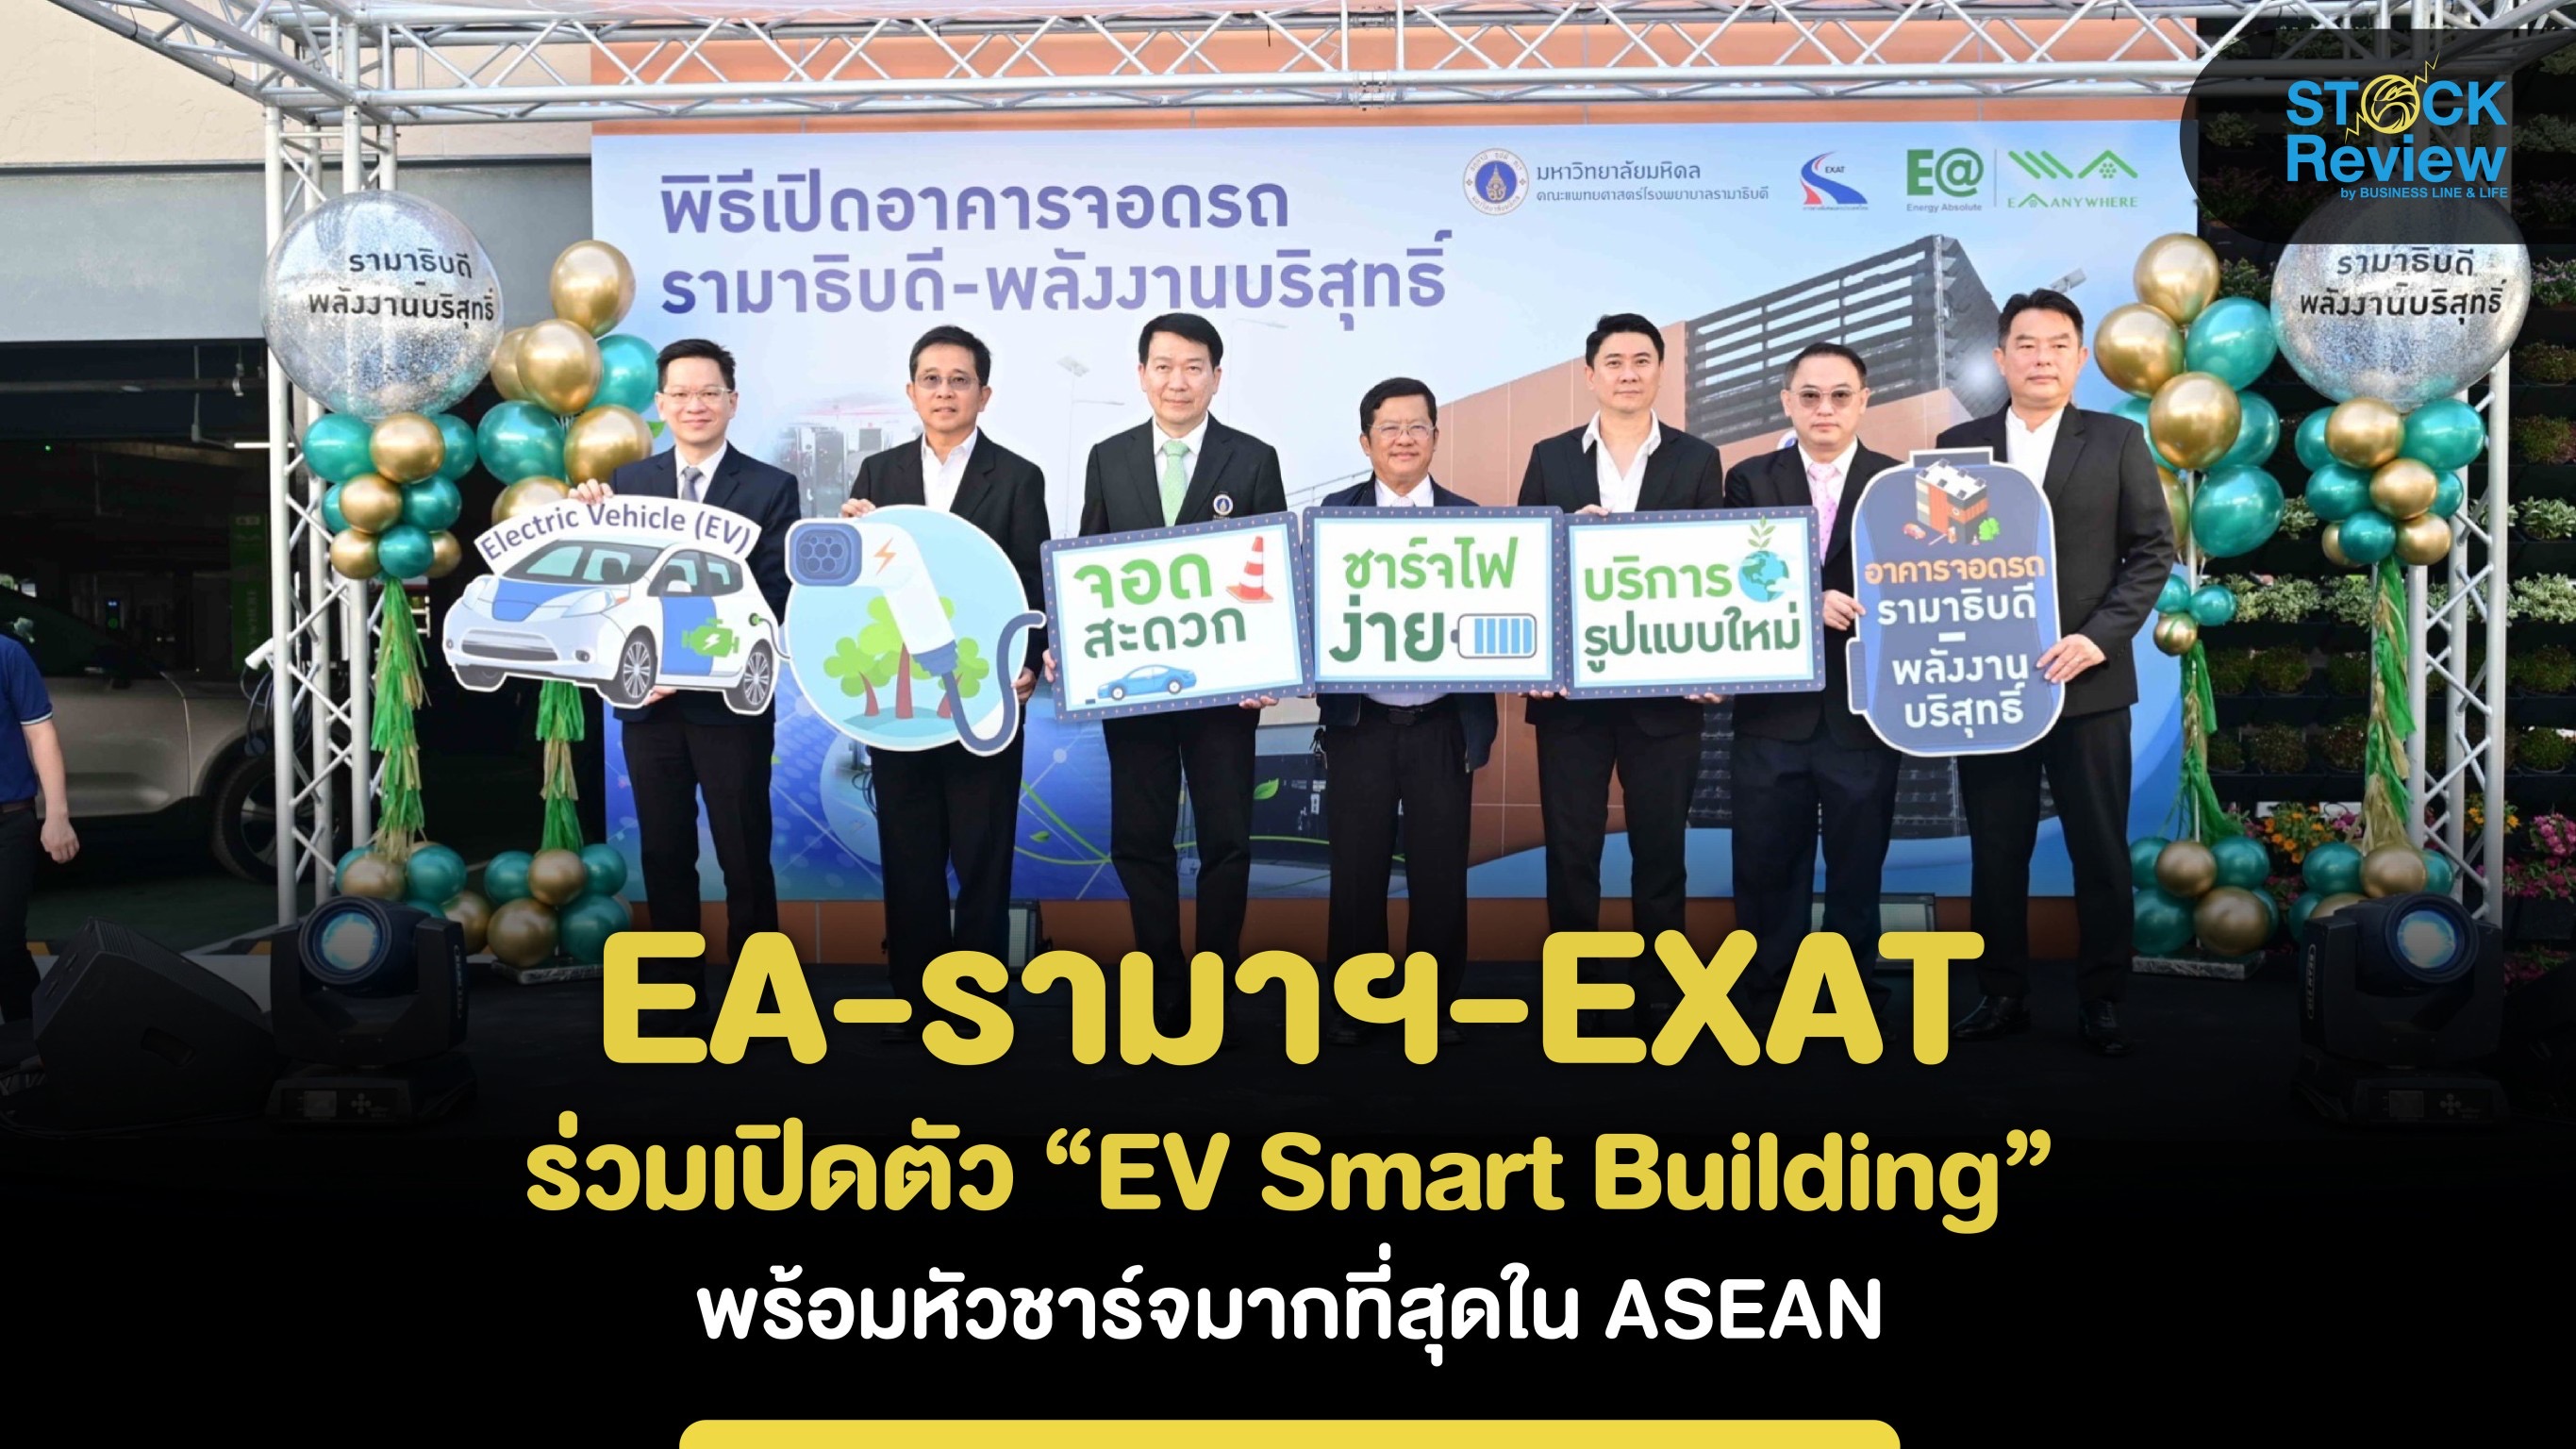 EA-รามาฯ-EXAT เปิดตัว “EV Smart Building” by EA Anywhere